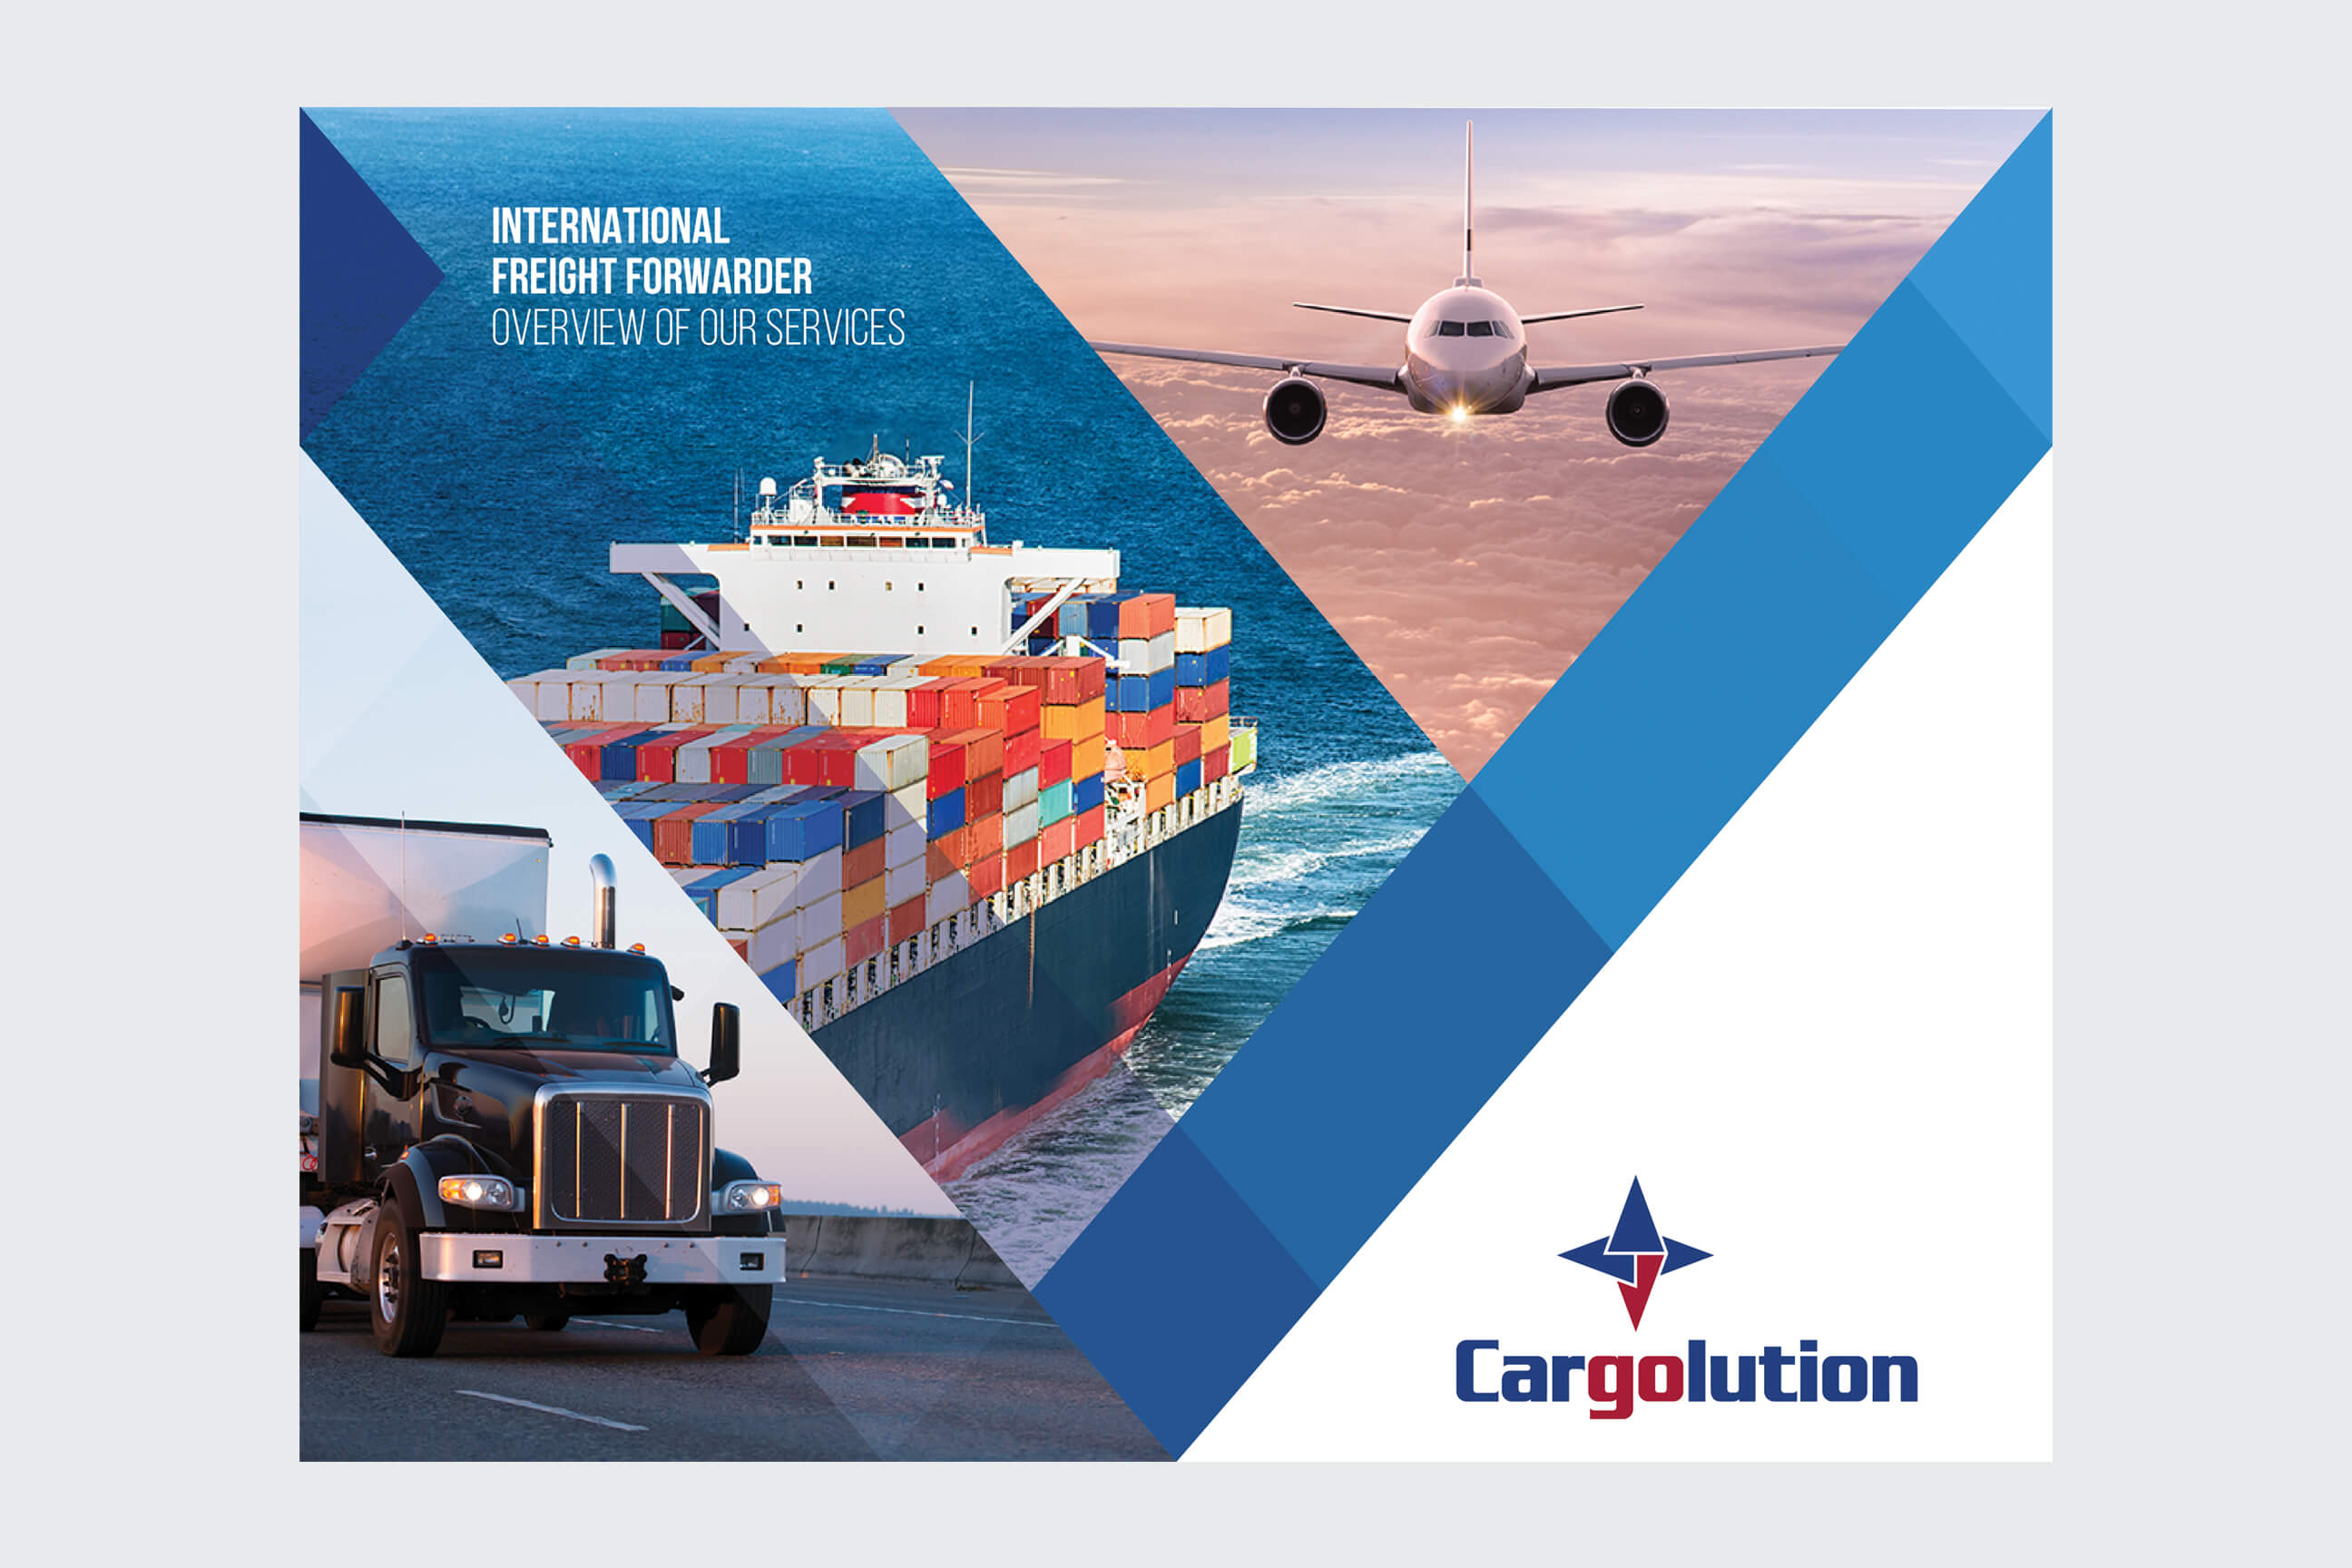 Seo montreal - corporate presentation creation - Cargolution